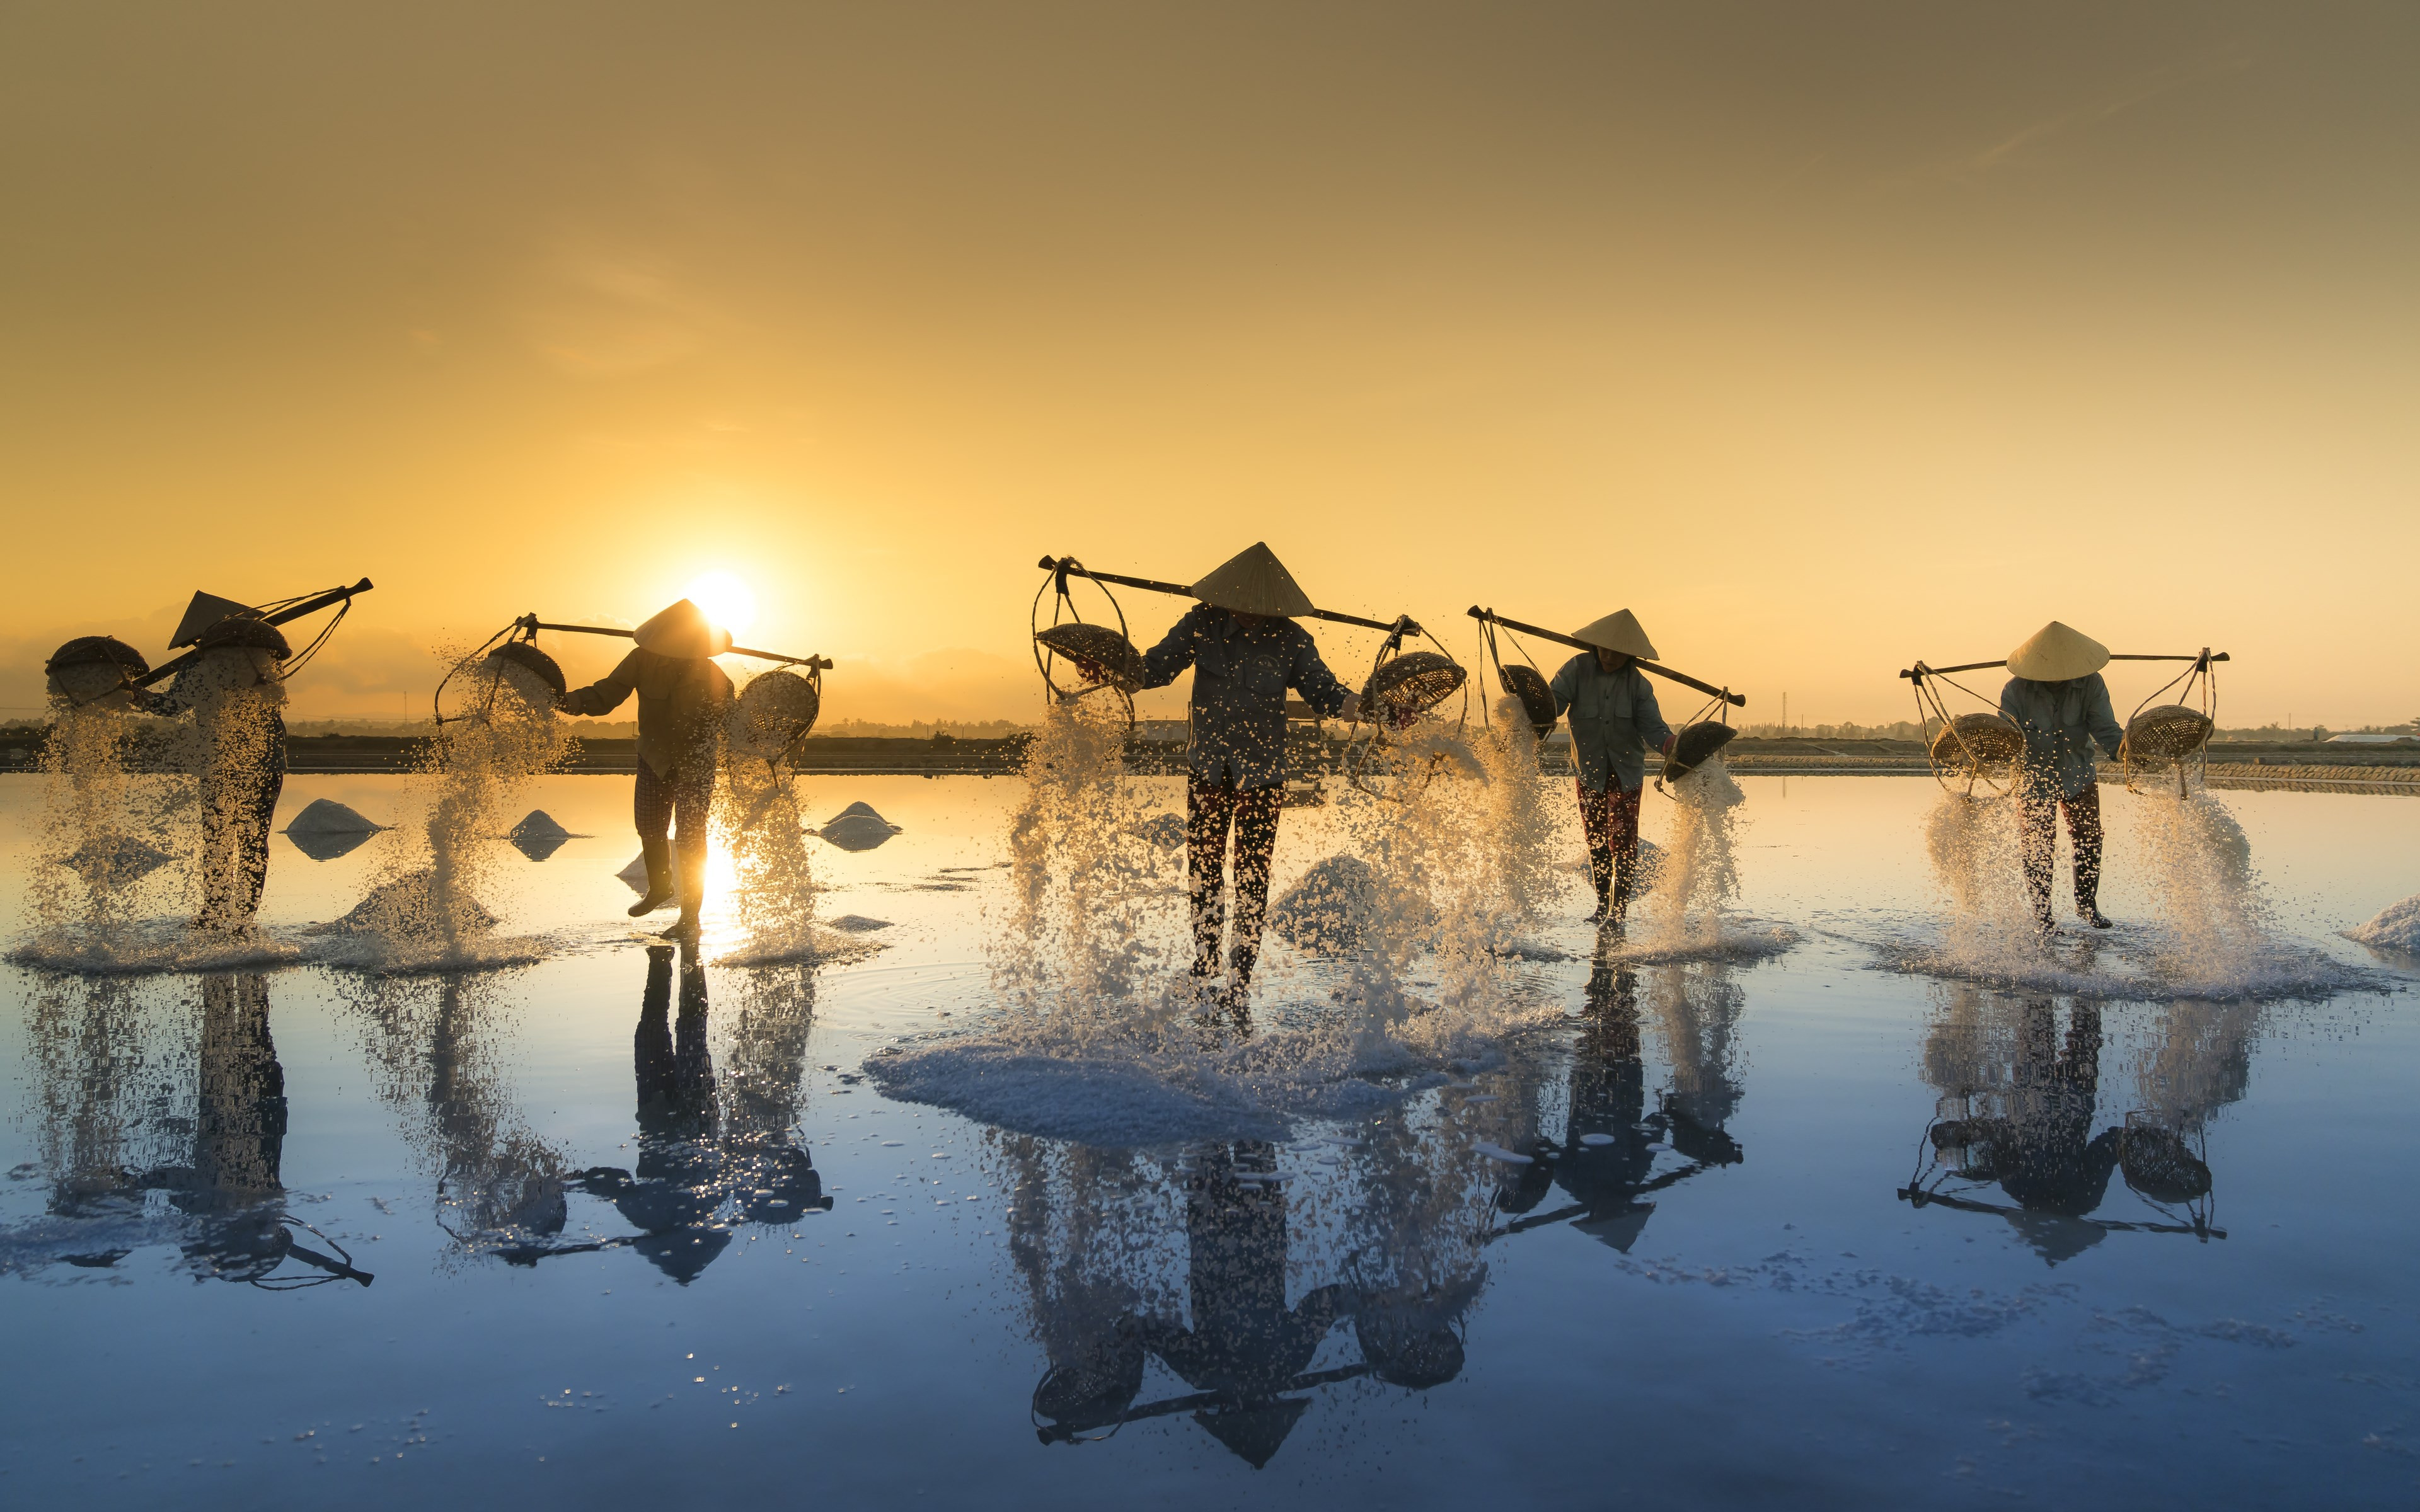 People harvesting salt in Vietnam wallpaper 3840x2400